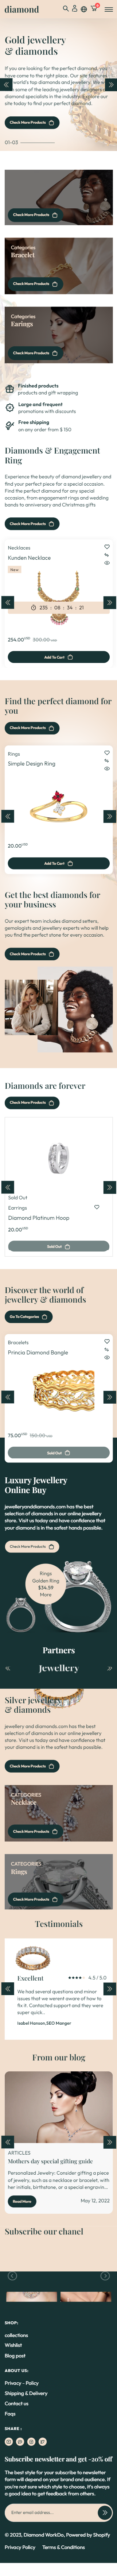 Diamond Shopify Theme - WorkDo